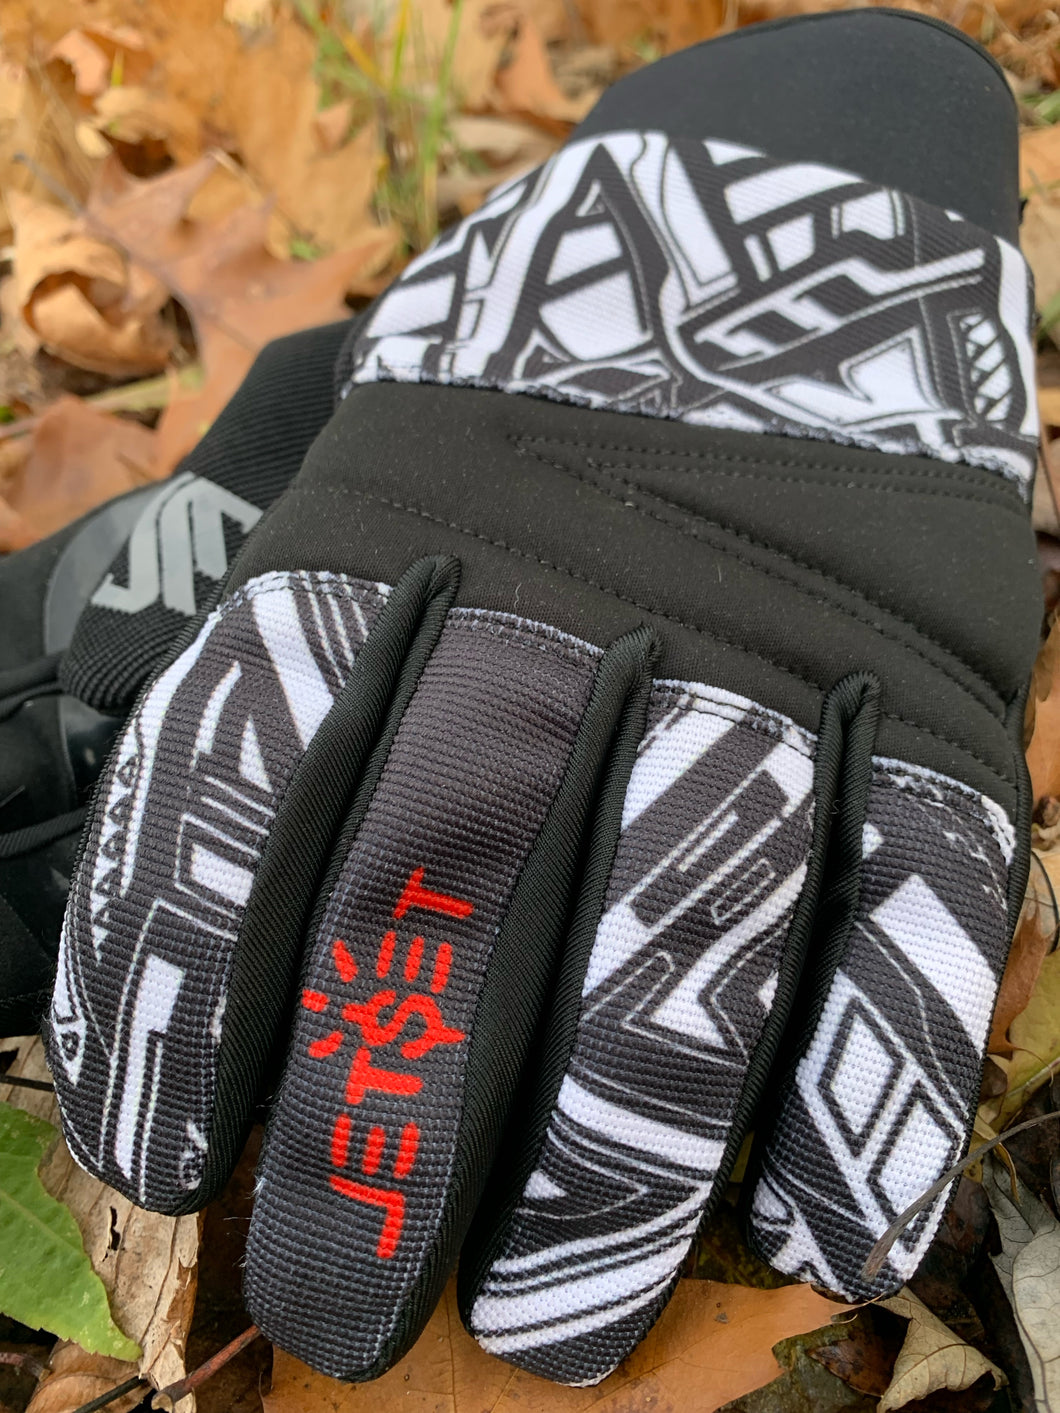 JetSet MacGyver Gloves